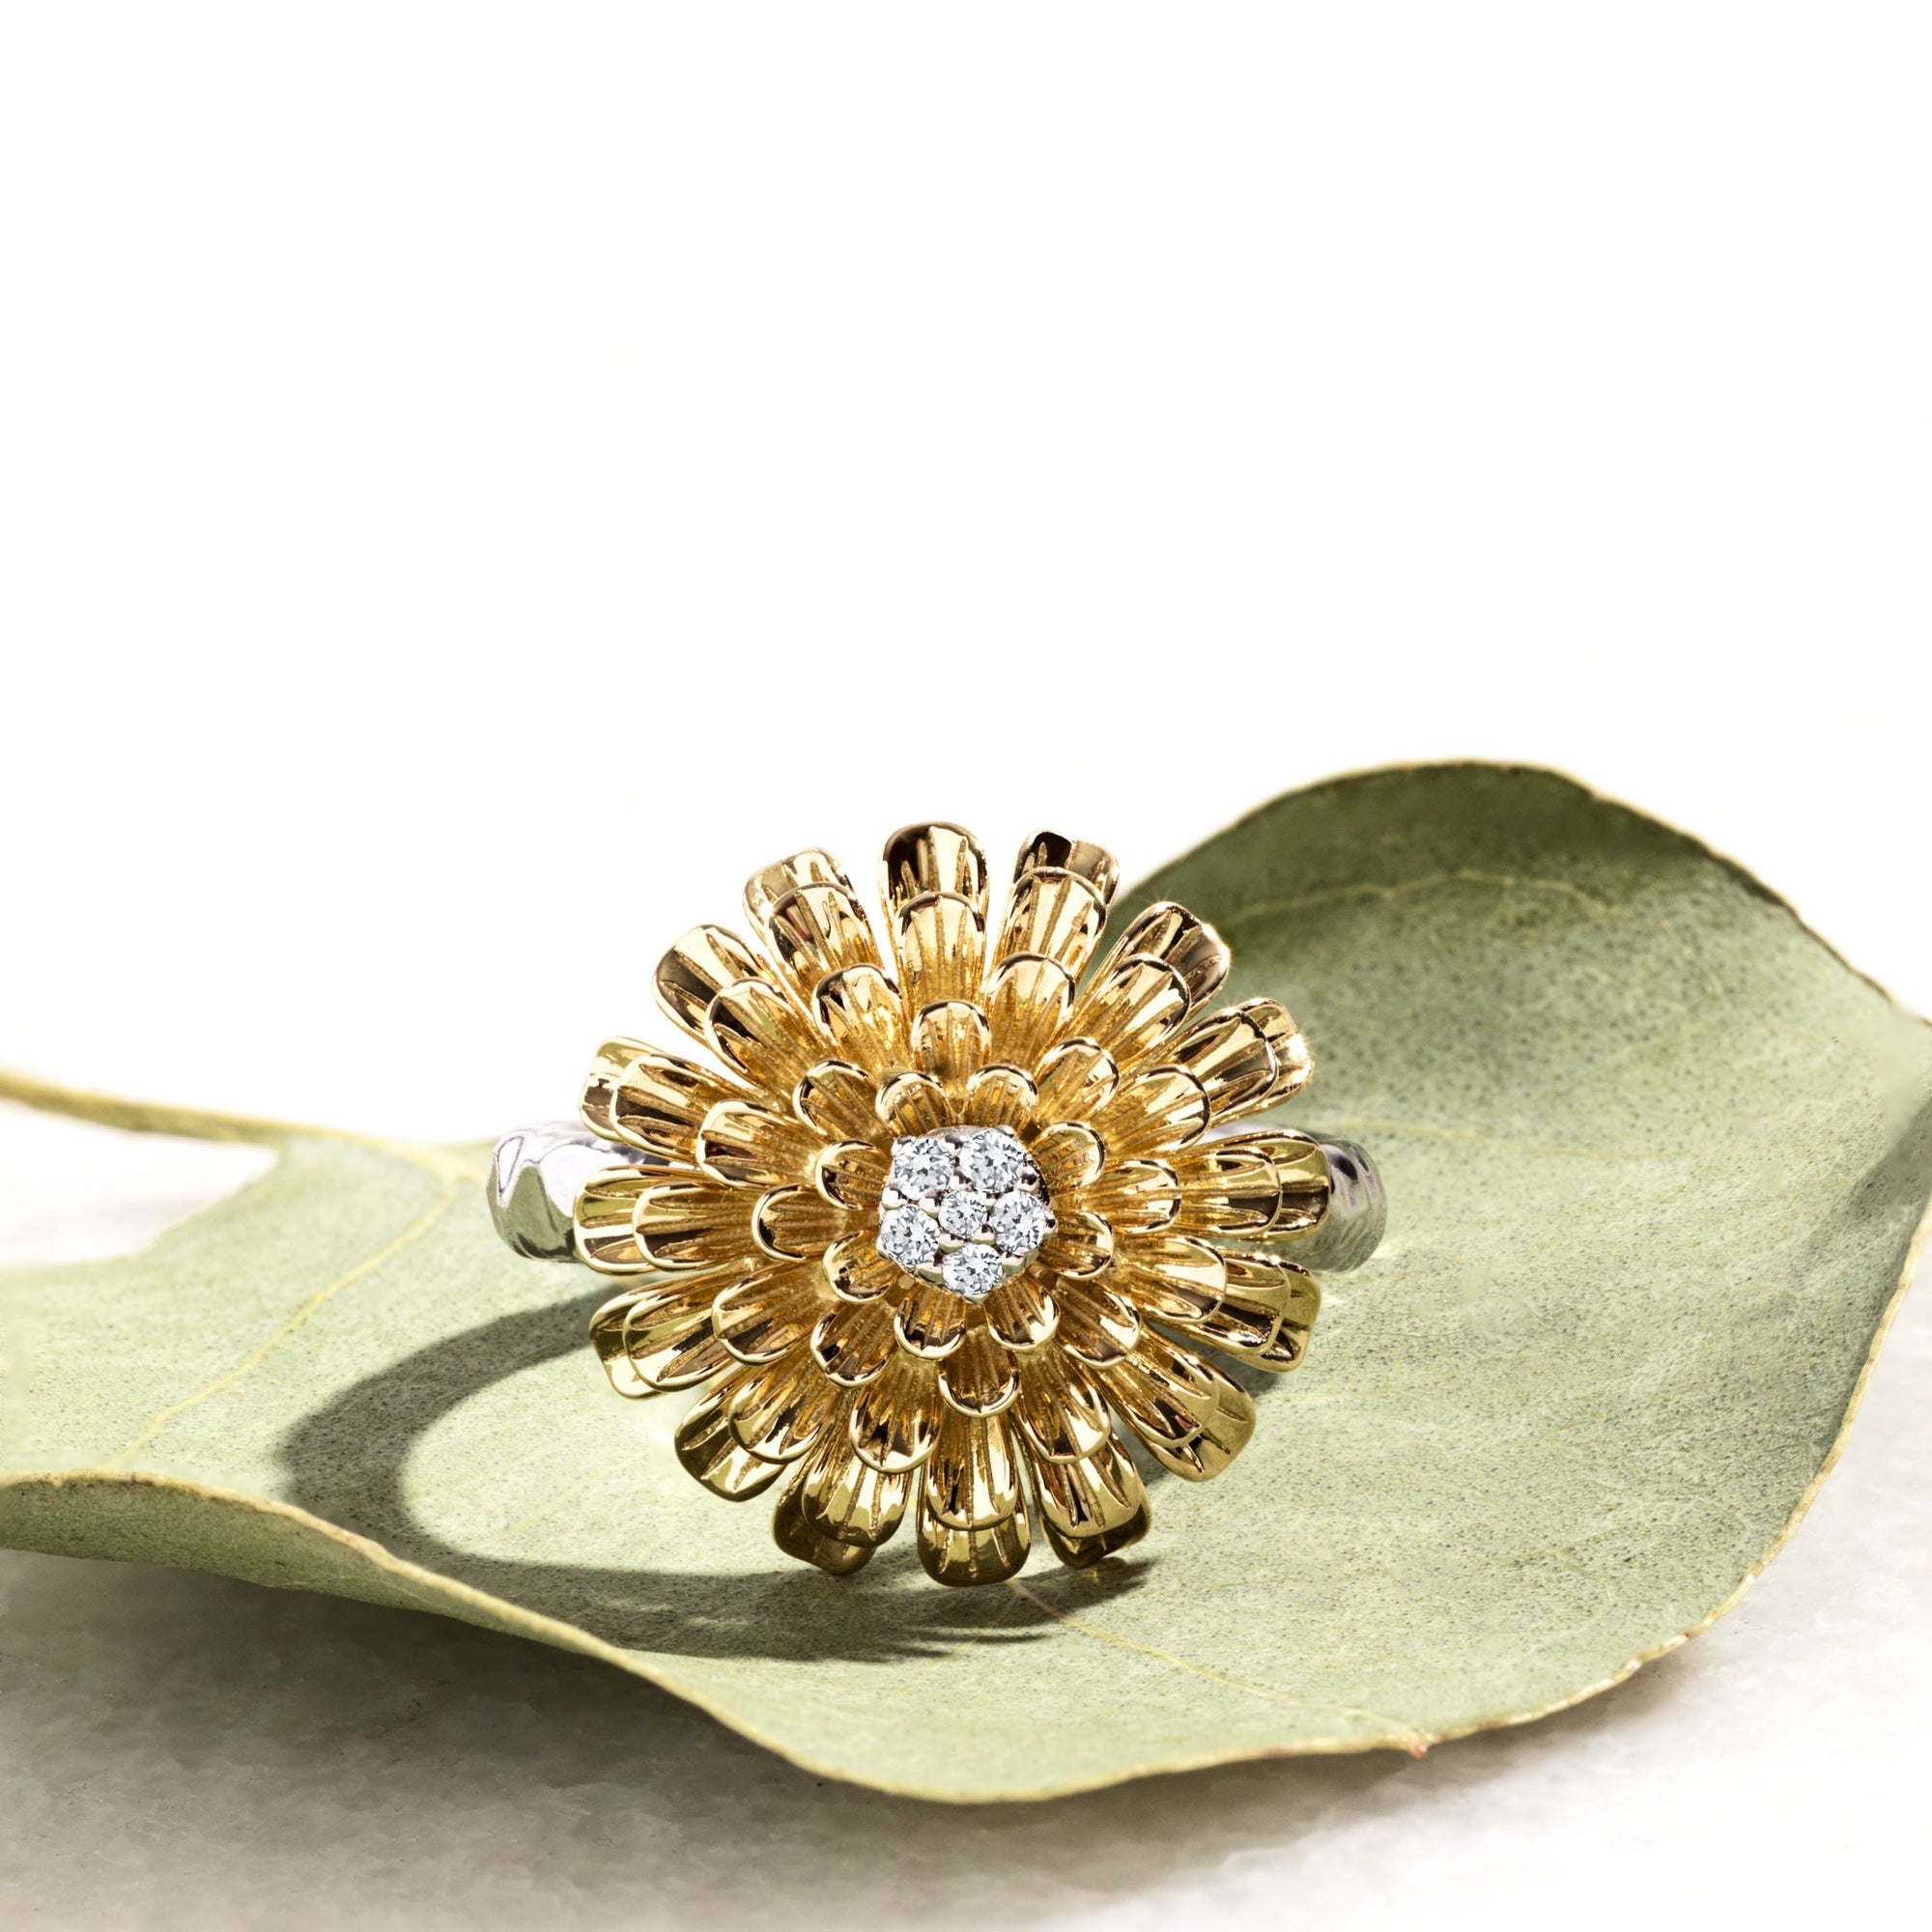 Dandelion Jewelry Collection | Michael Aram